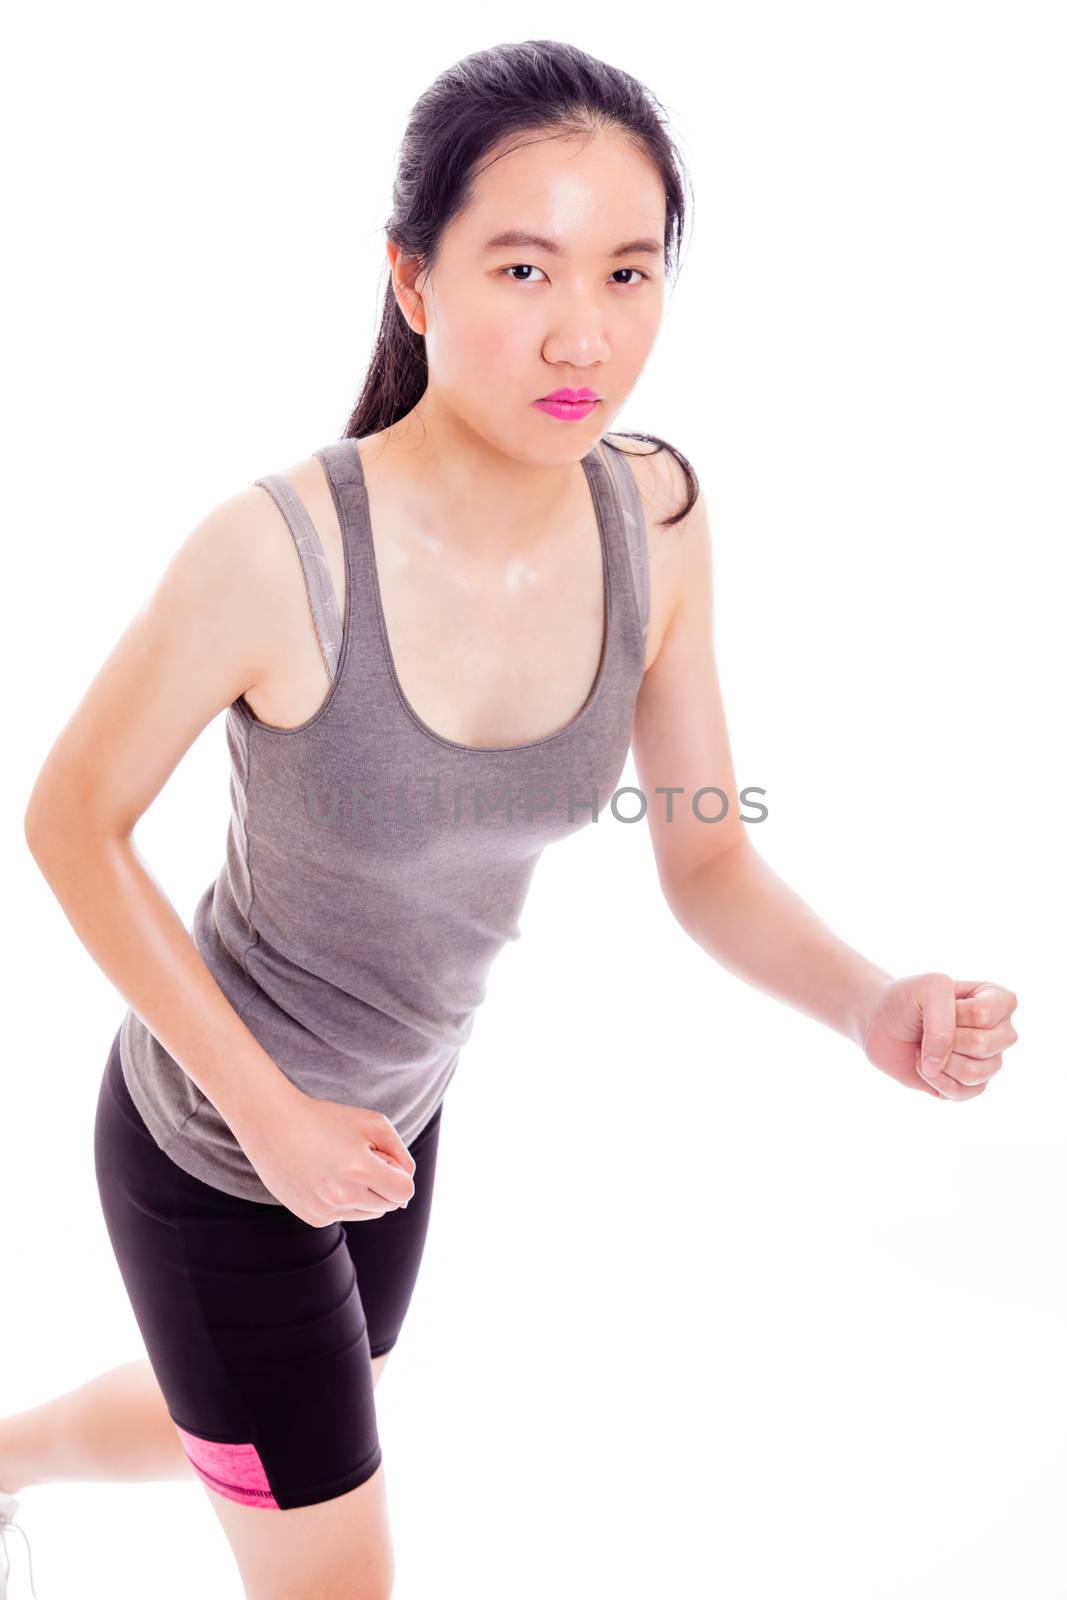 Teenage Asian girl jogging on white background